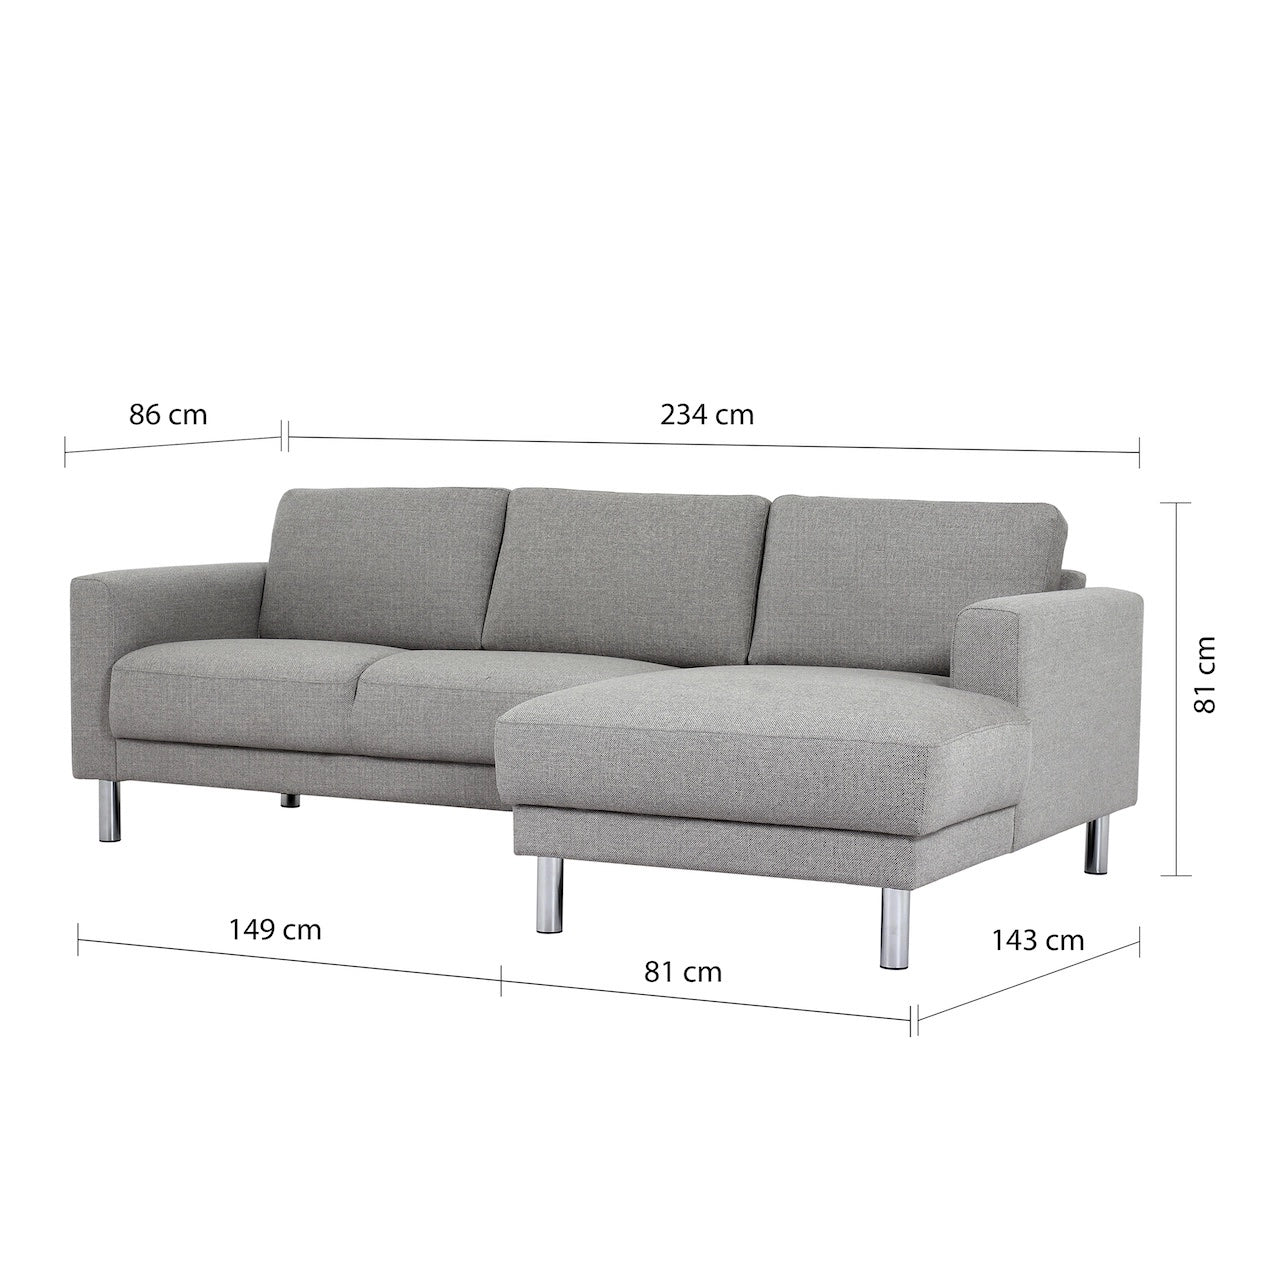 Furniture To Go Cleveland Chaiselongue Sofa (RH) in Nova Light Grey